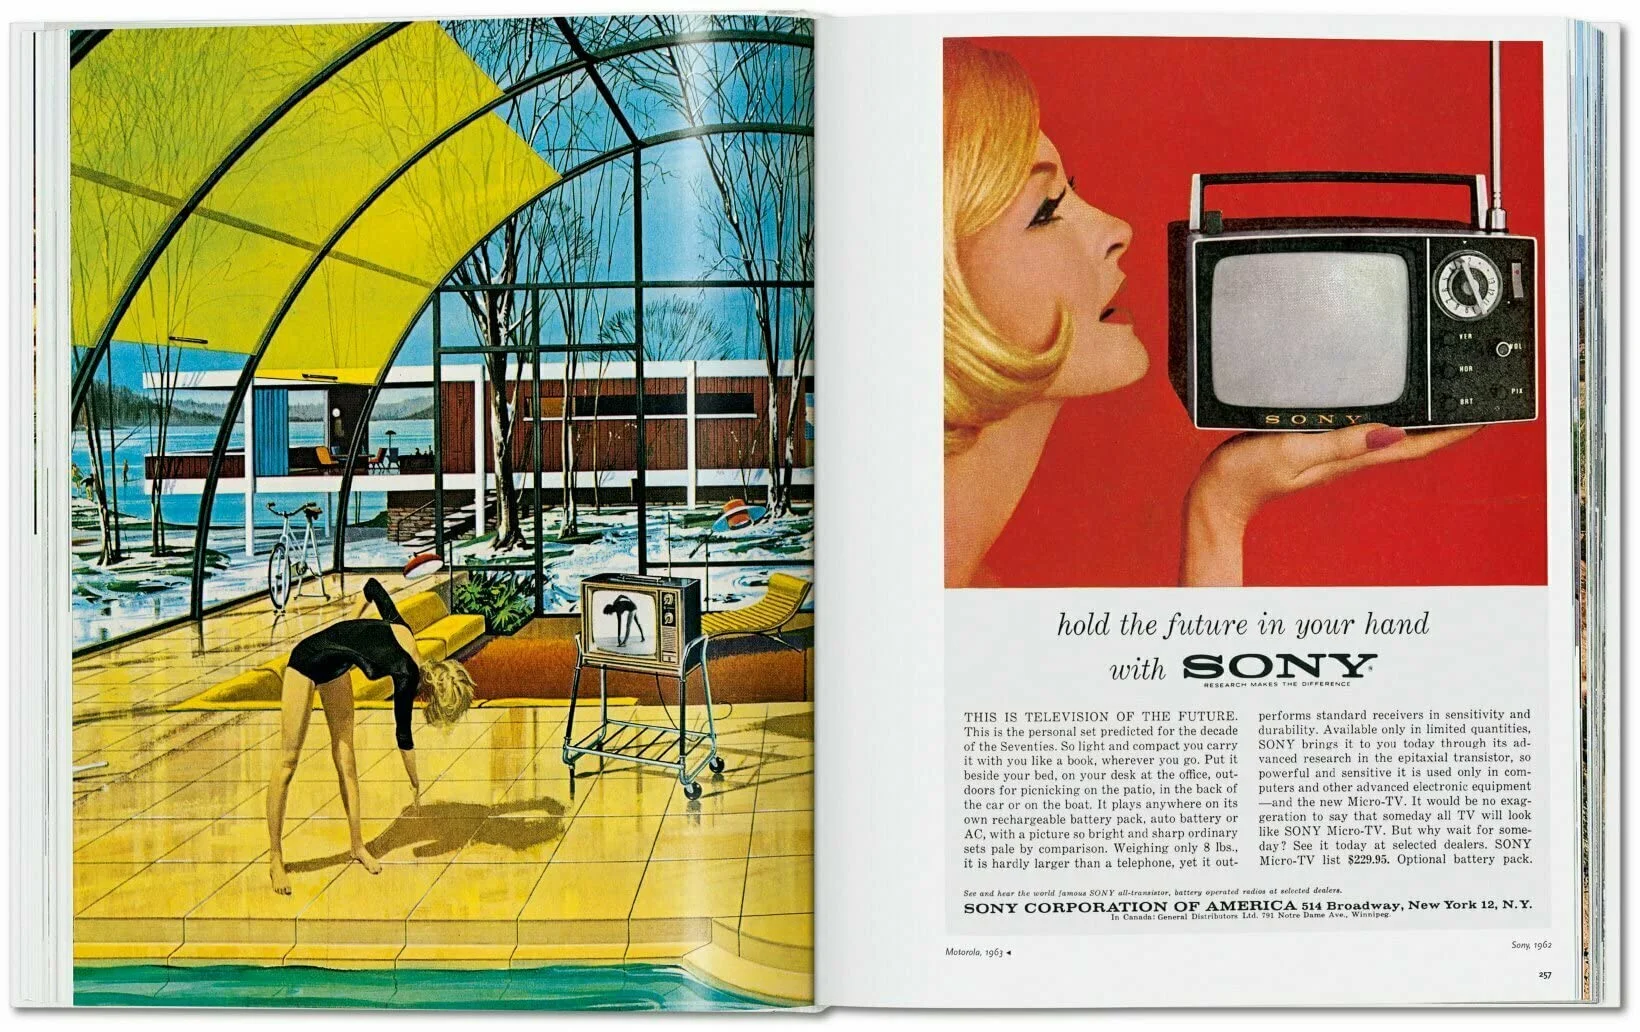 "All American Ads of the 60s" "Вся американская реклама 60-х годов "